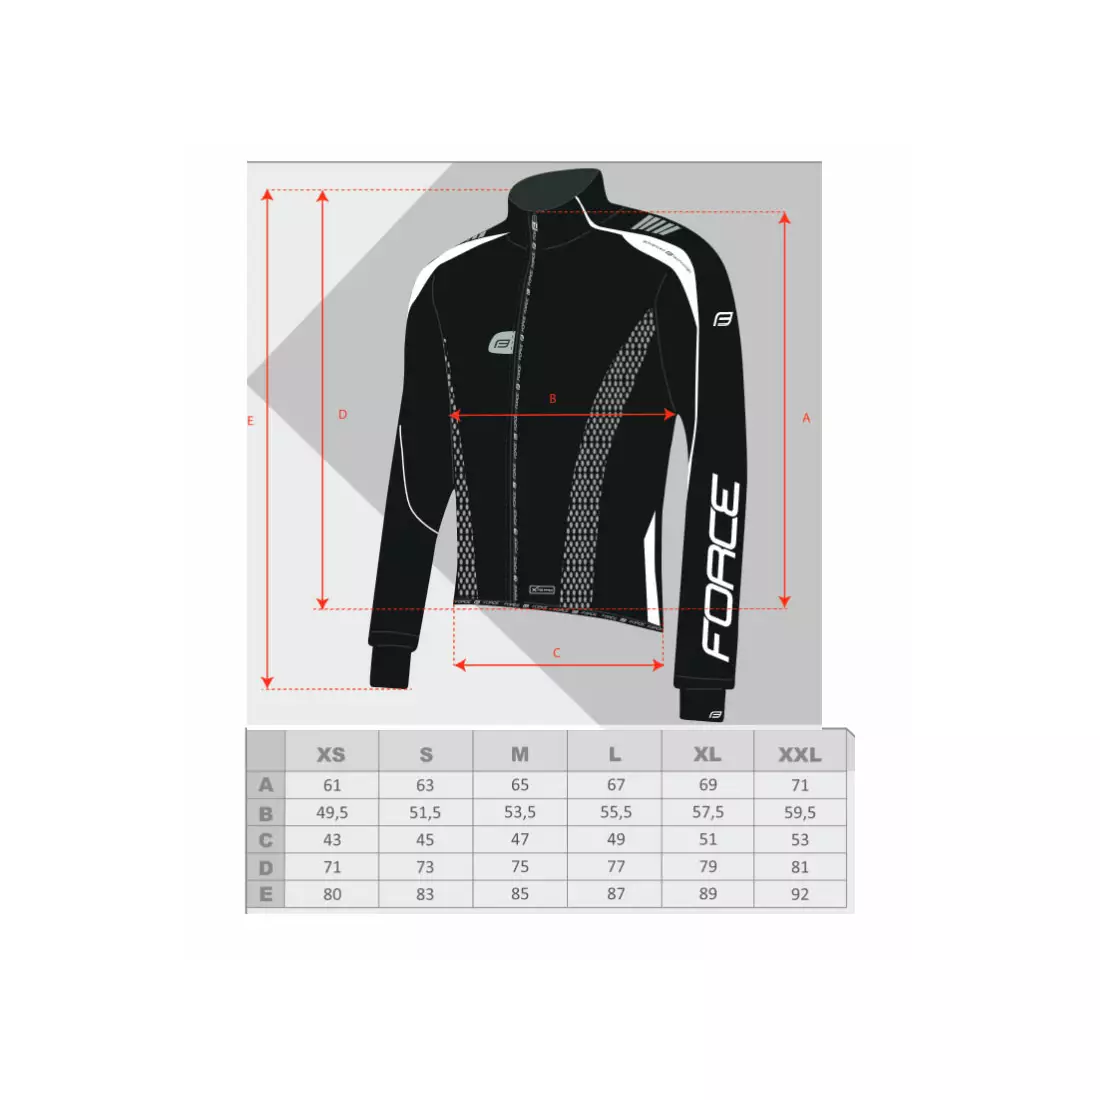 FORCE X72 PRO men's softshell bike jacket black-fluorine 90003